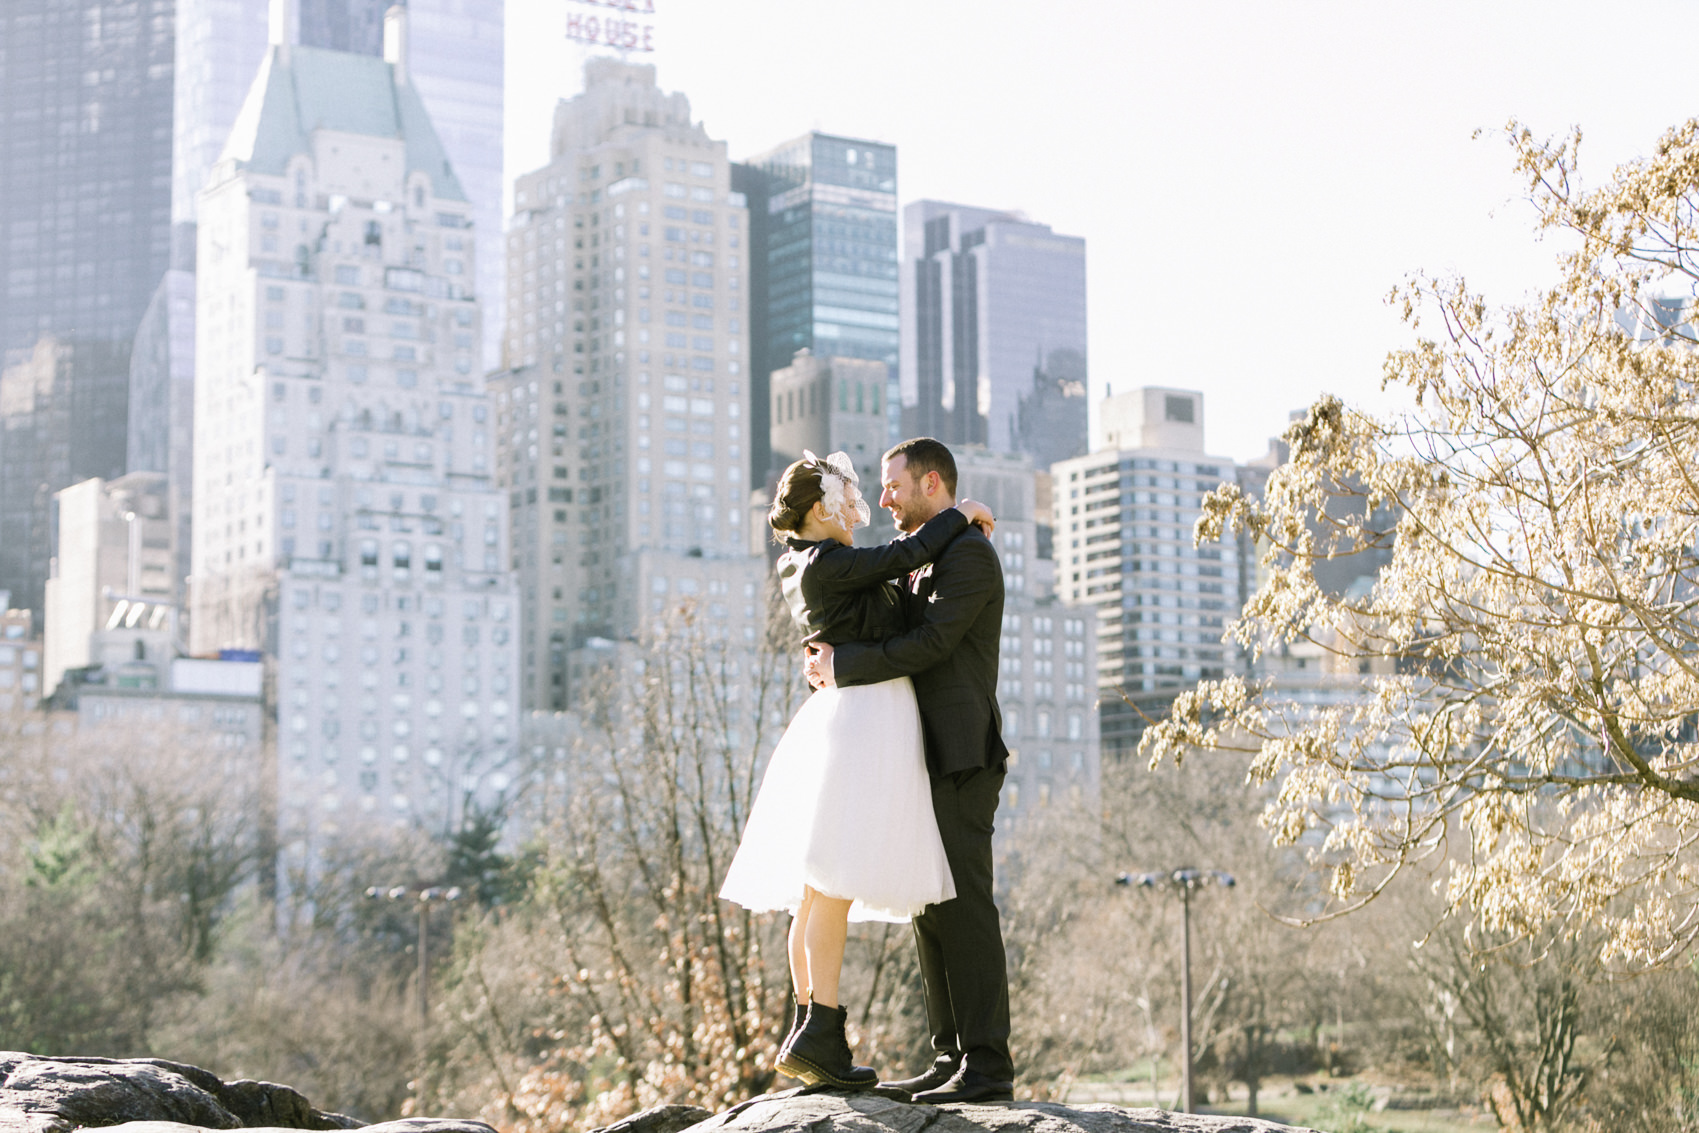 NYC-wedding-photos-by-Tanya-Isaeva-21.jpg